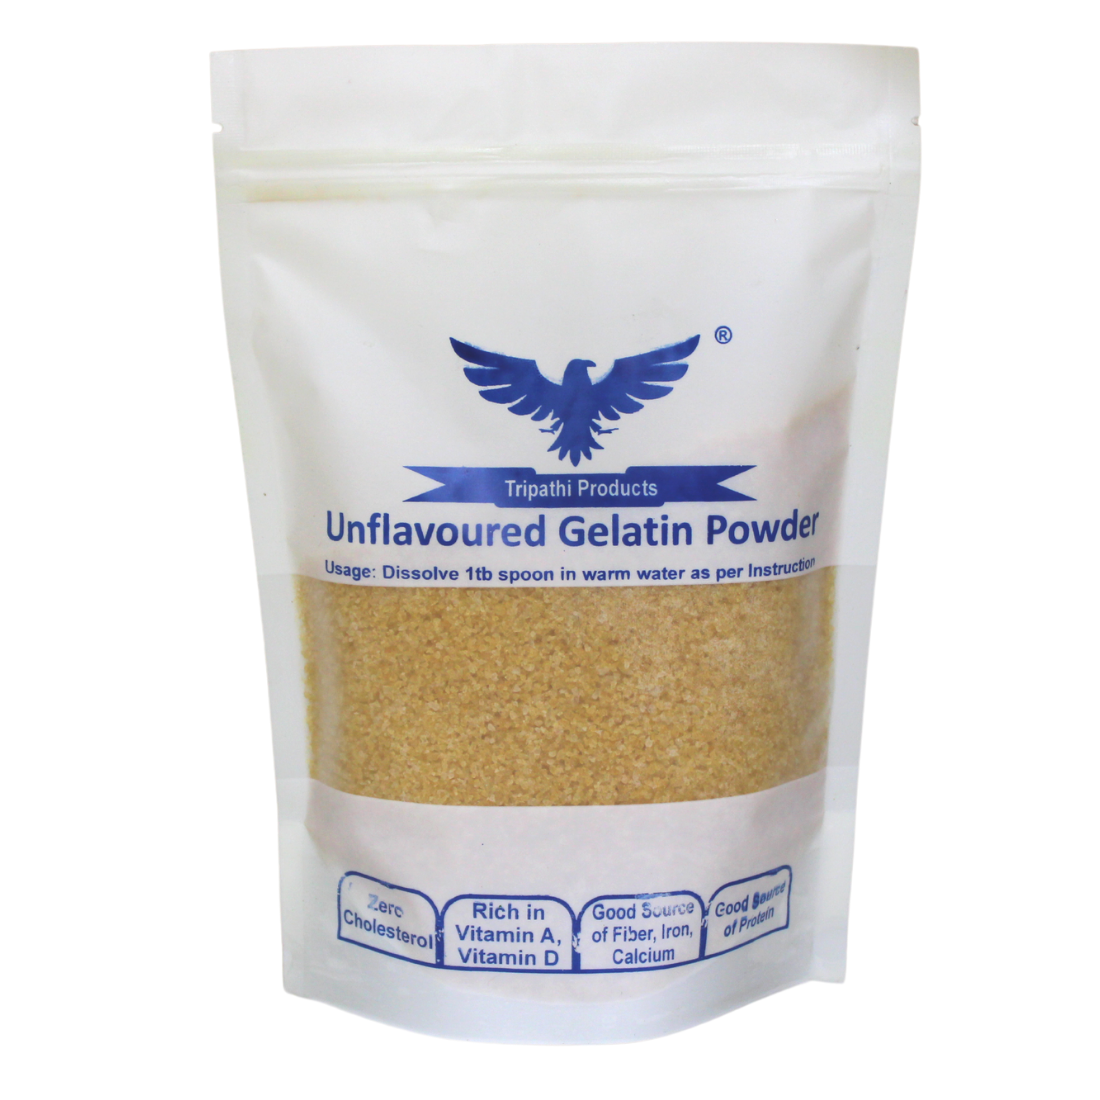 Unflavoured Gelatin Powder 400gm - Boost Your Culinary Creativity with This Pure Gelatin Powder